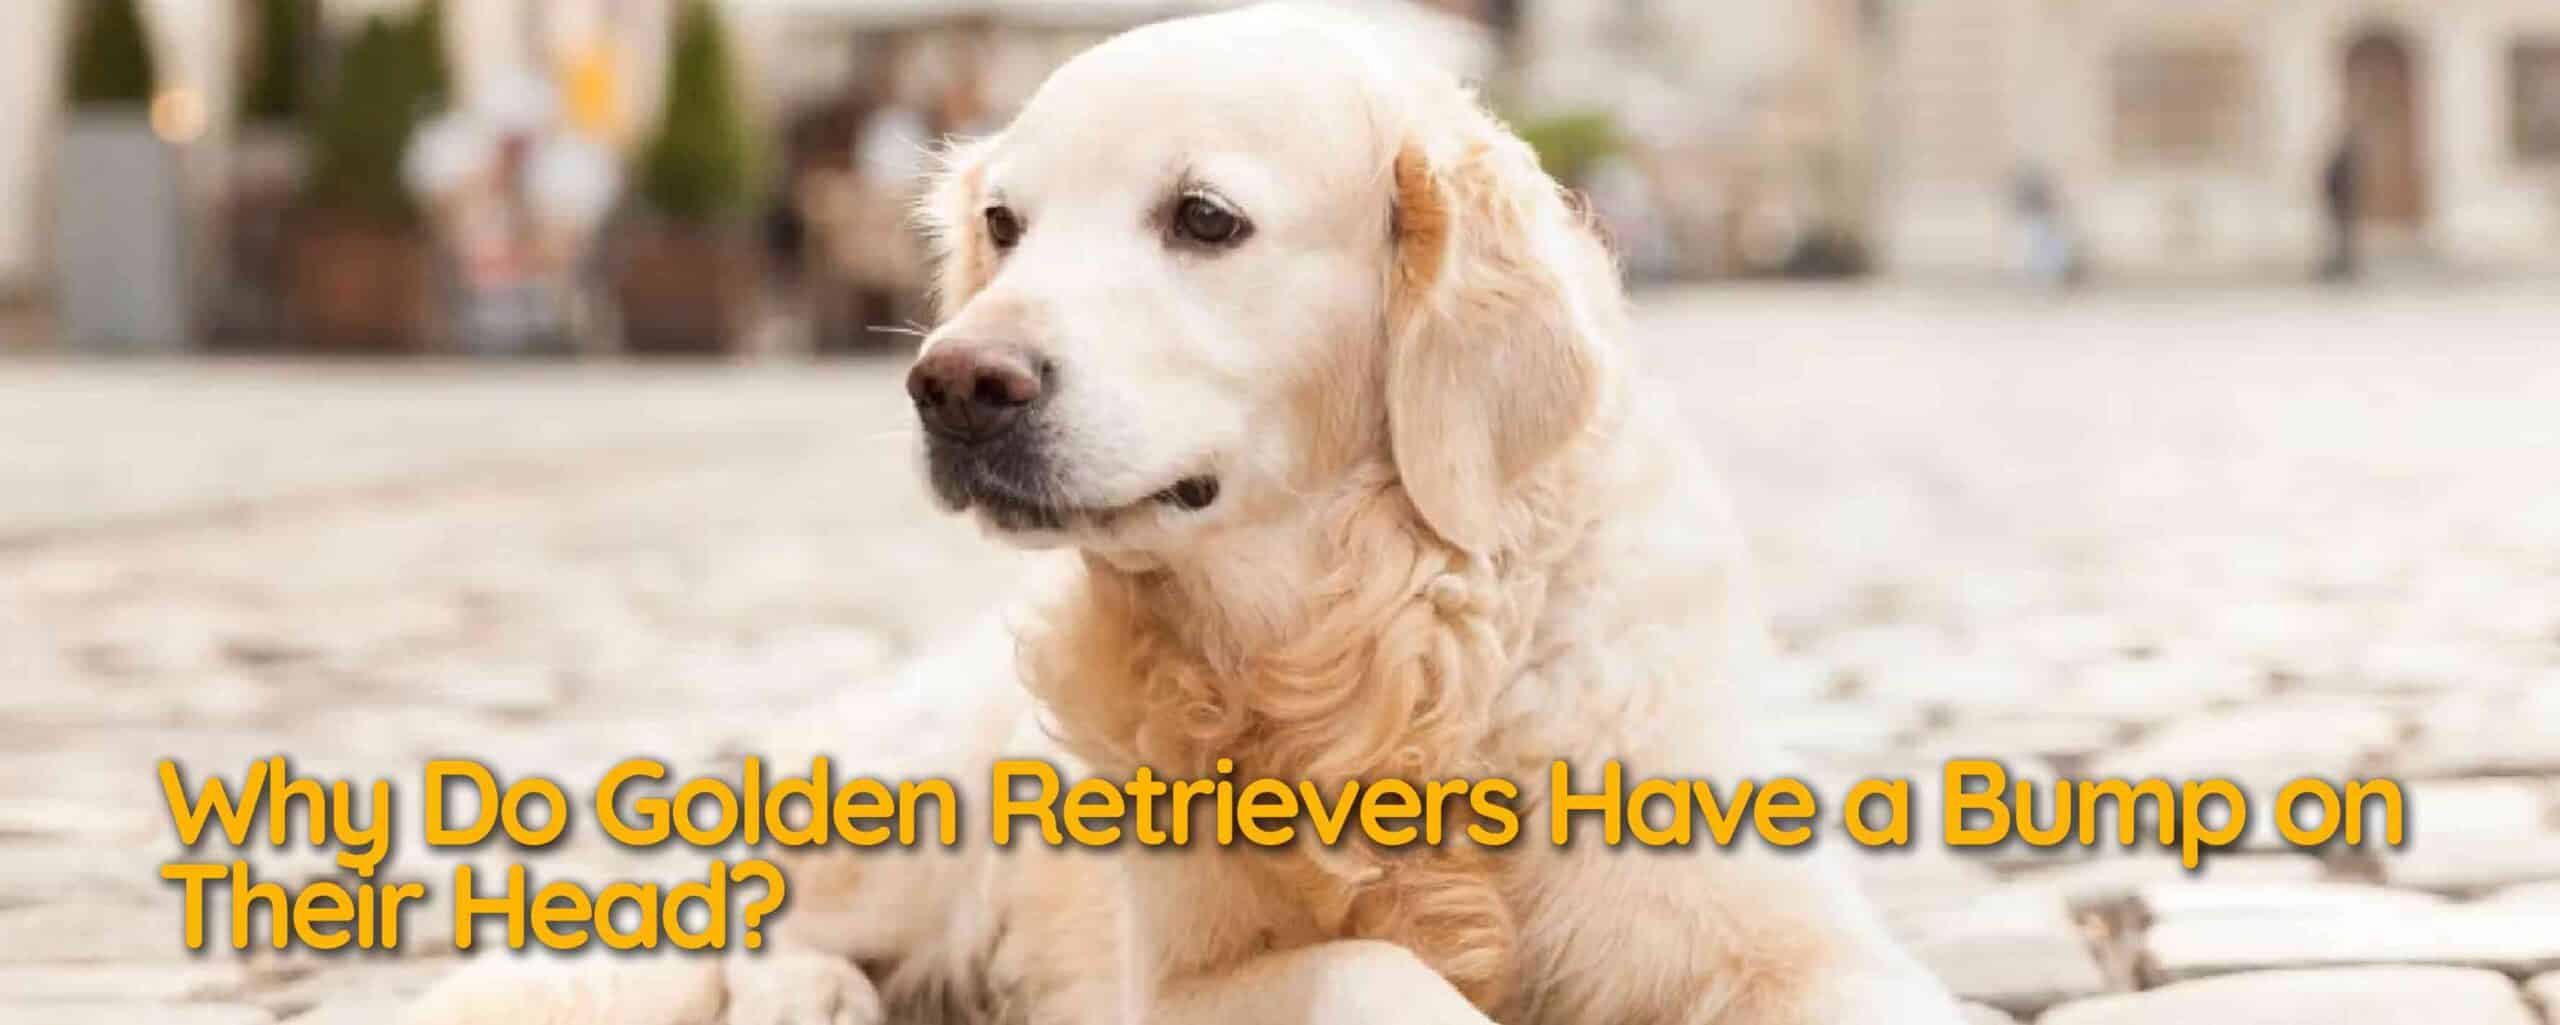 Why Do Golden Retrievers Have a Bump on Their Head?